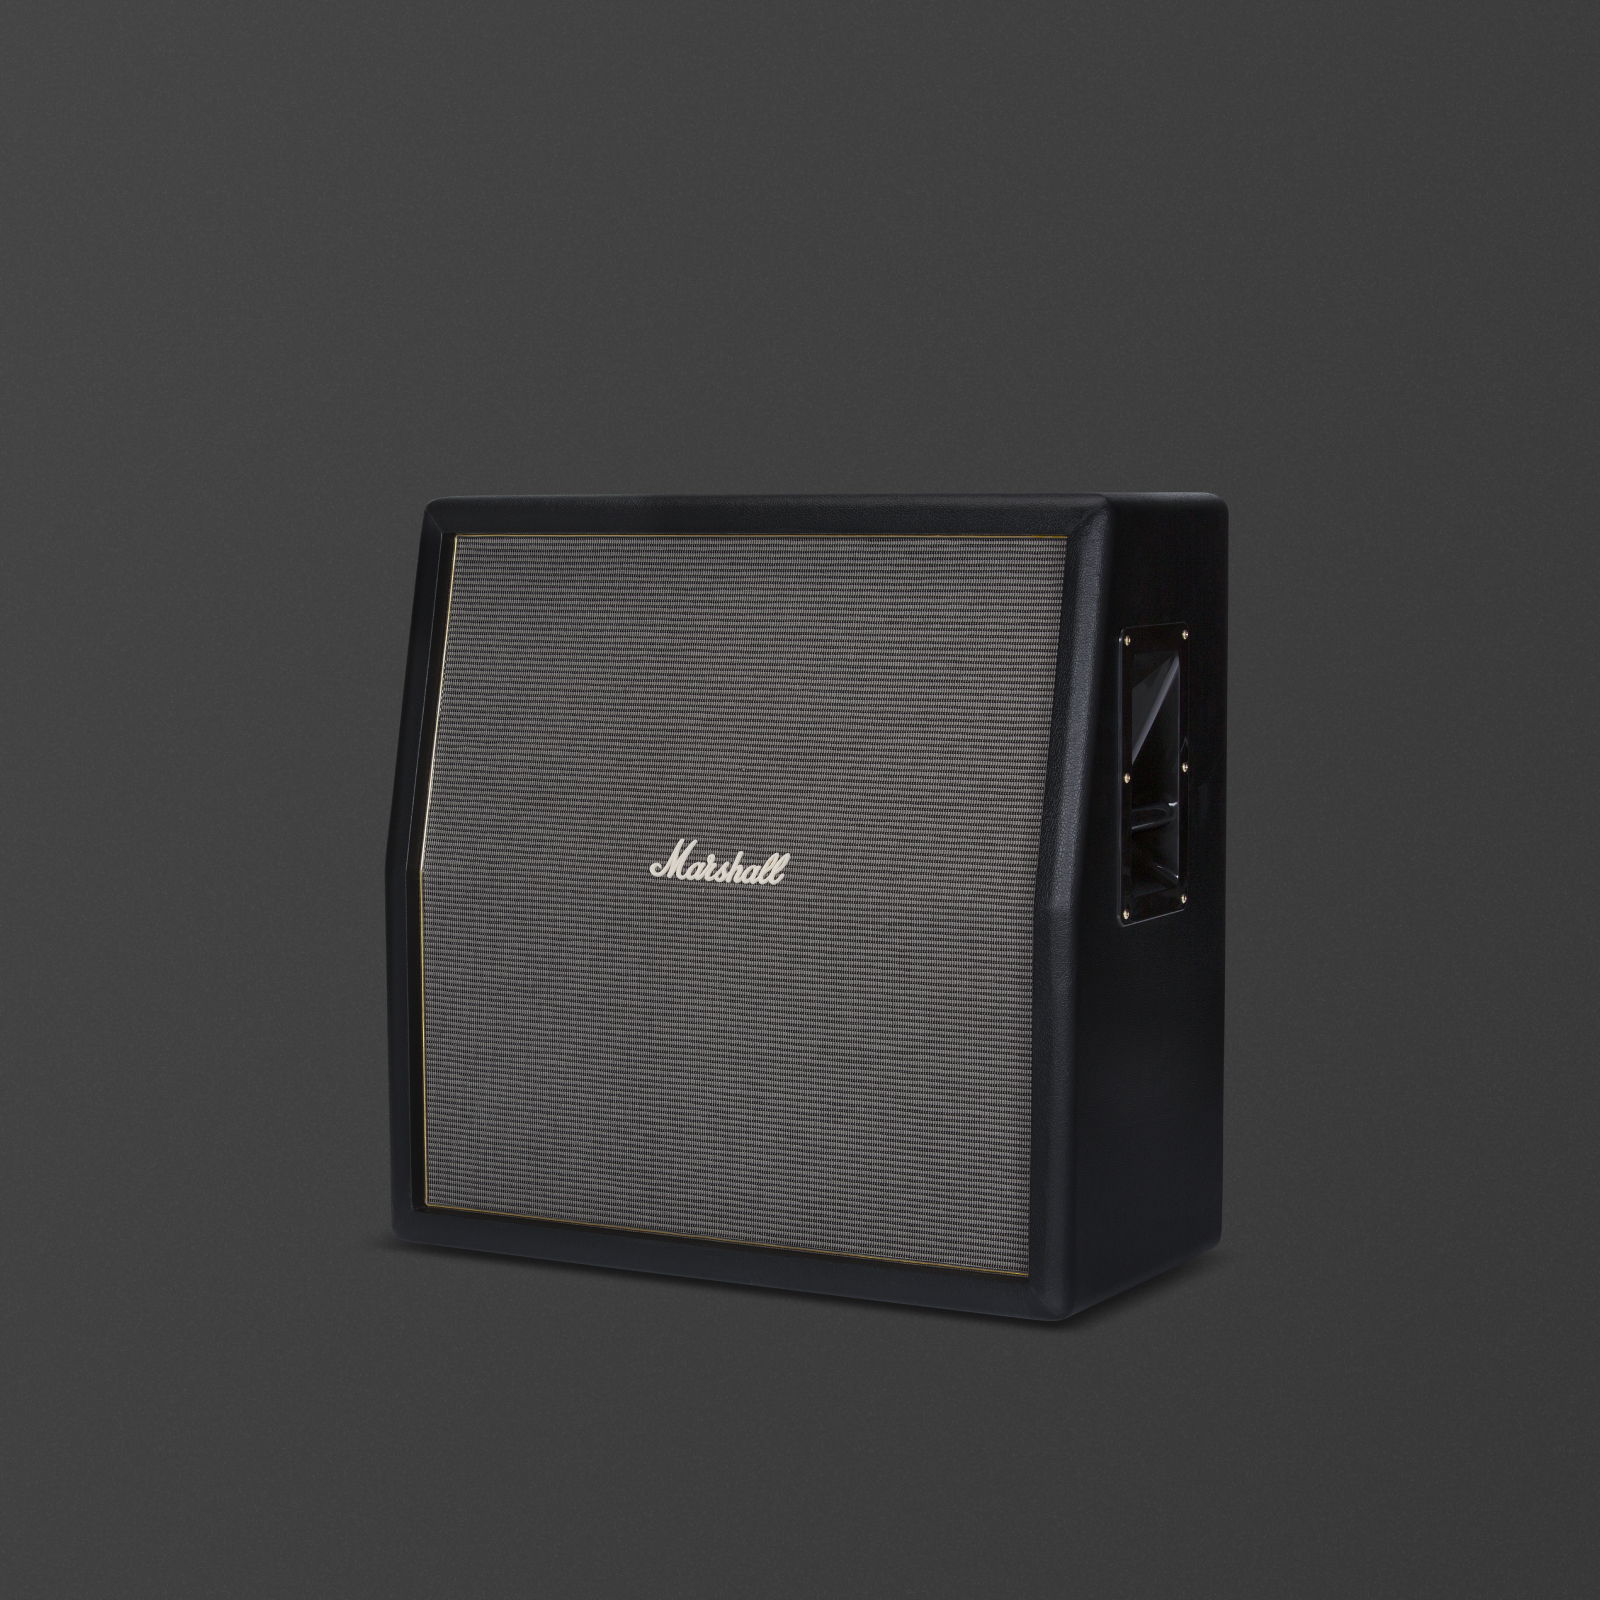 Black 4x12” straight base cabinet for the Origin range